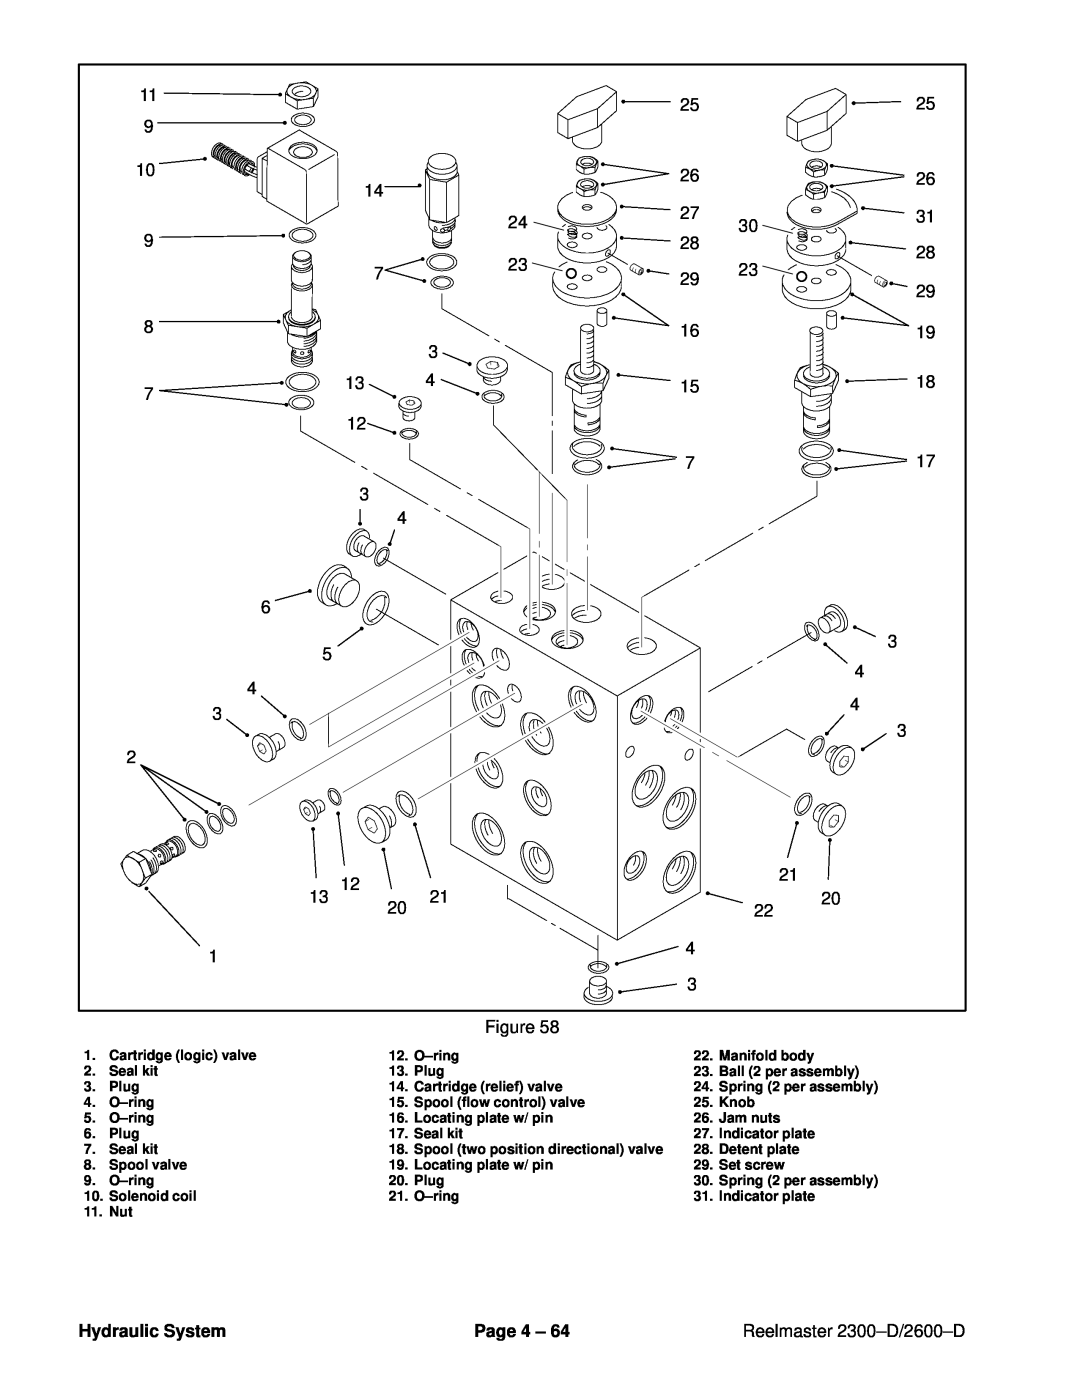 Toro 2300-D, 2600D service manual Hydraulic System, Page 4 ±, Reelmaster 2300±D/2600±D 